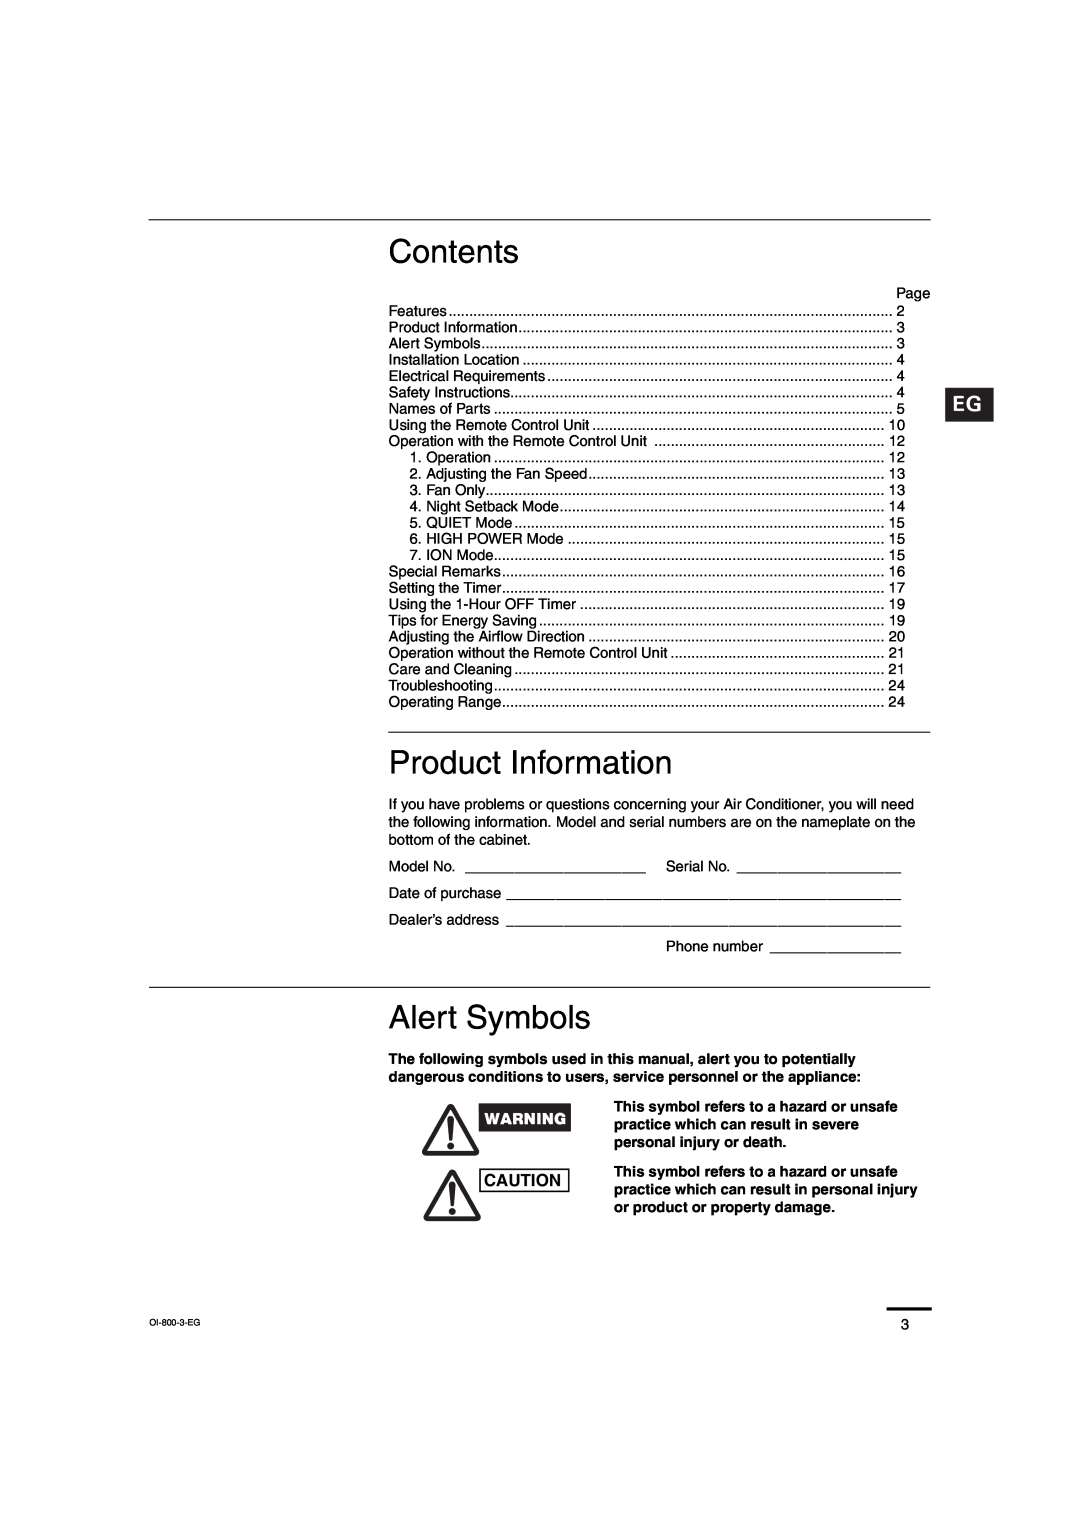 Sanyo CL2472, C2472, C1872, CL1872 service manual Contents, Product Information, Alert Symbols 